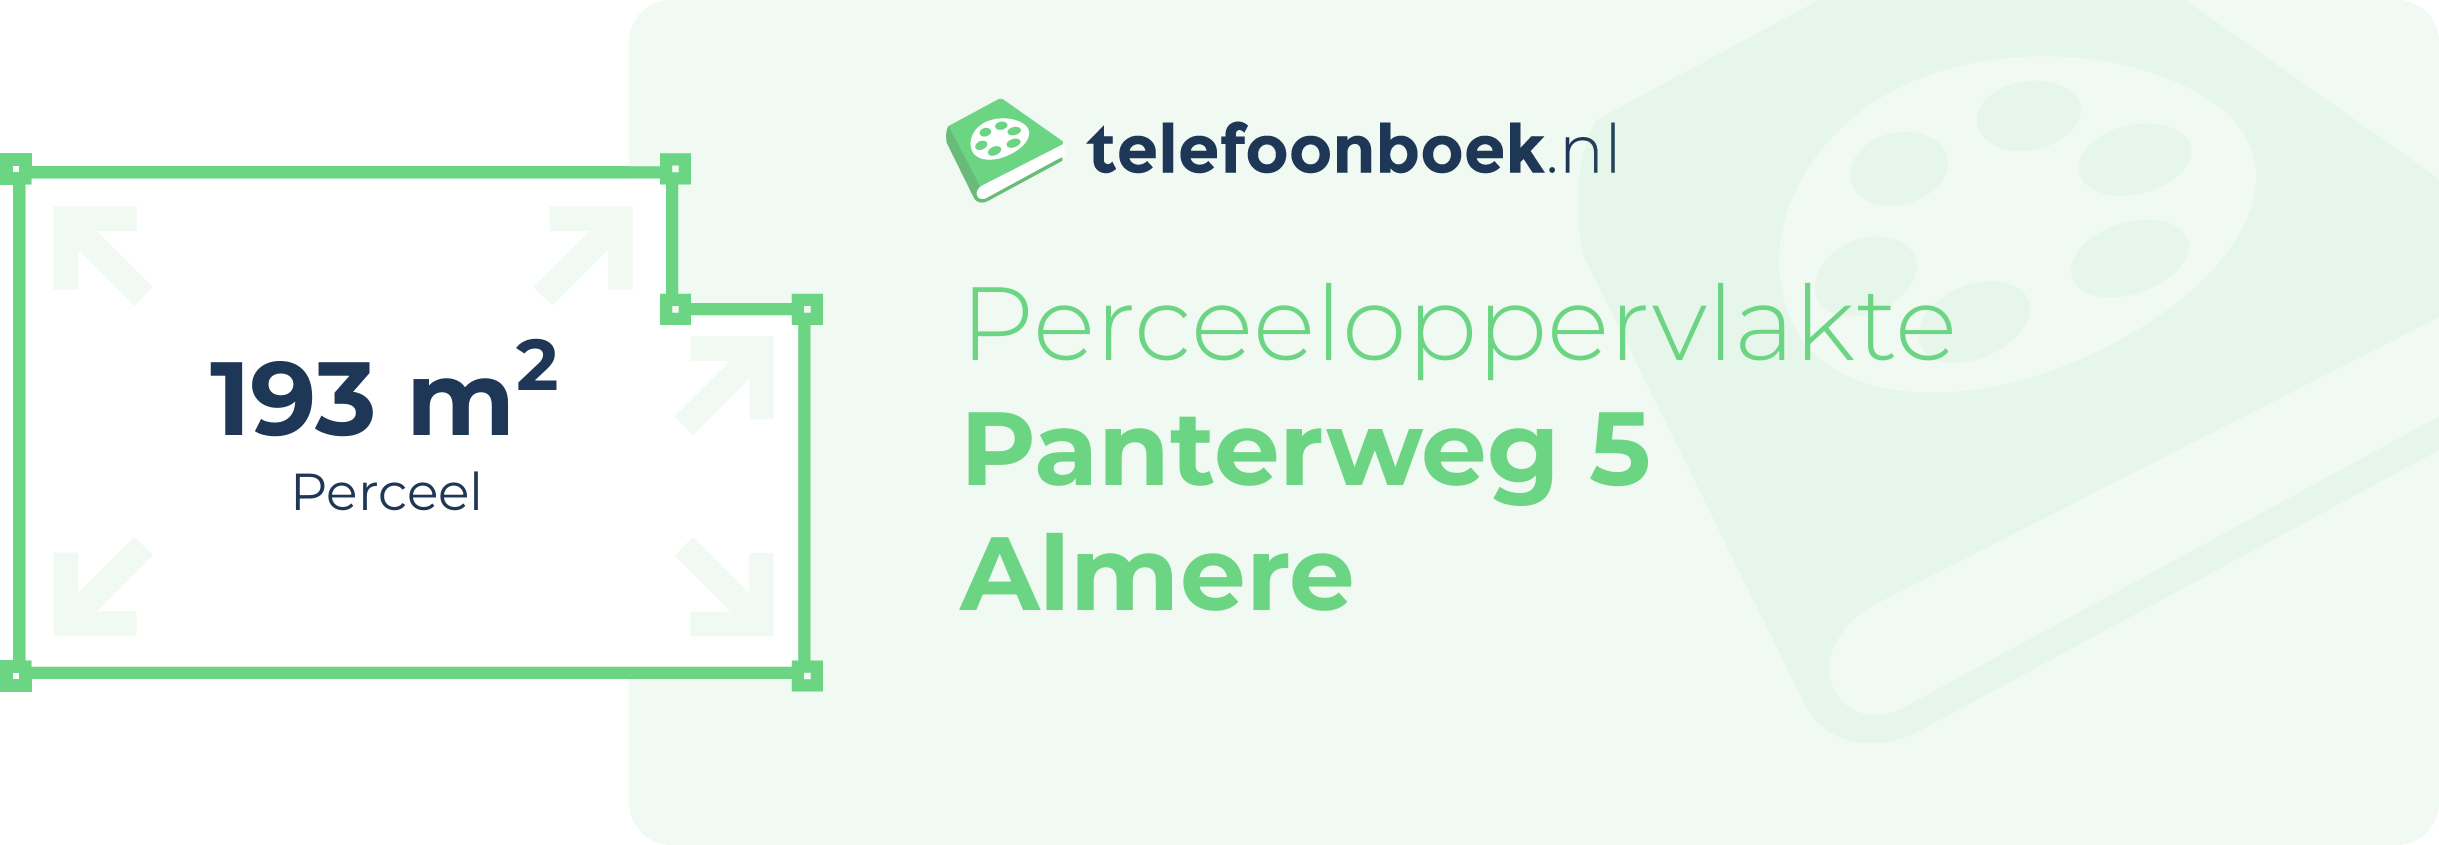 Perceeloppervlakte Panterweg 5 Almere